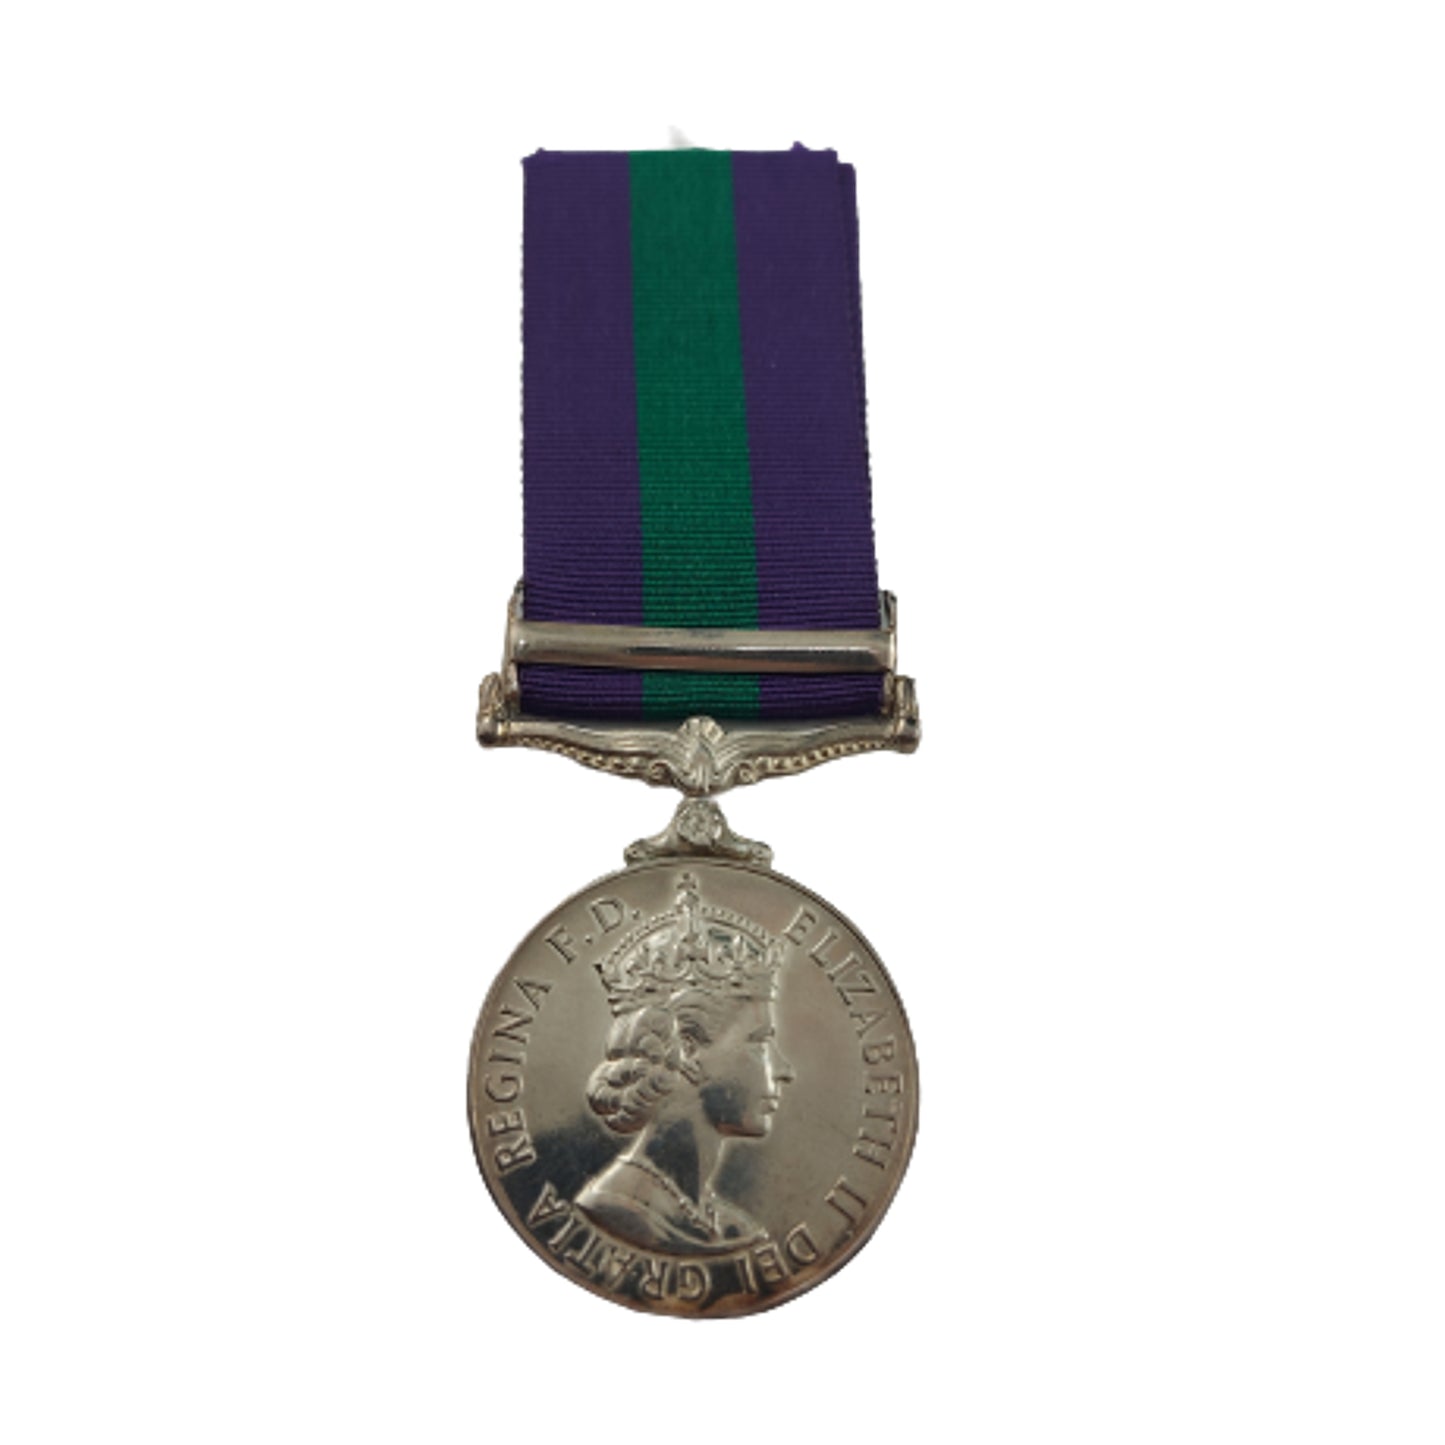 QEII RAF Royal Air Force General Service Medal